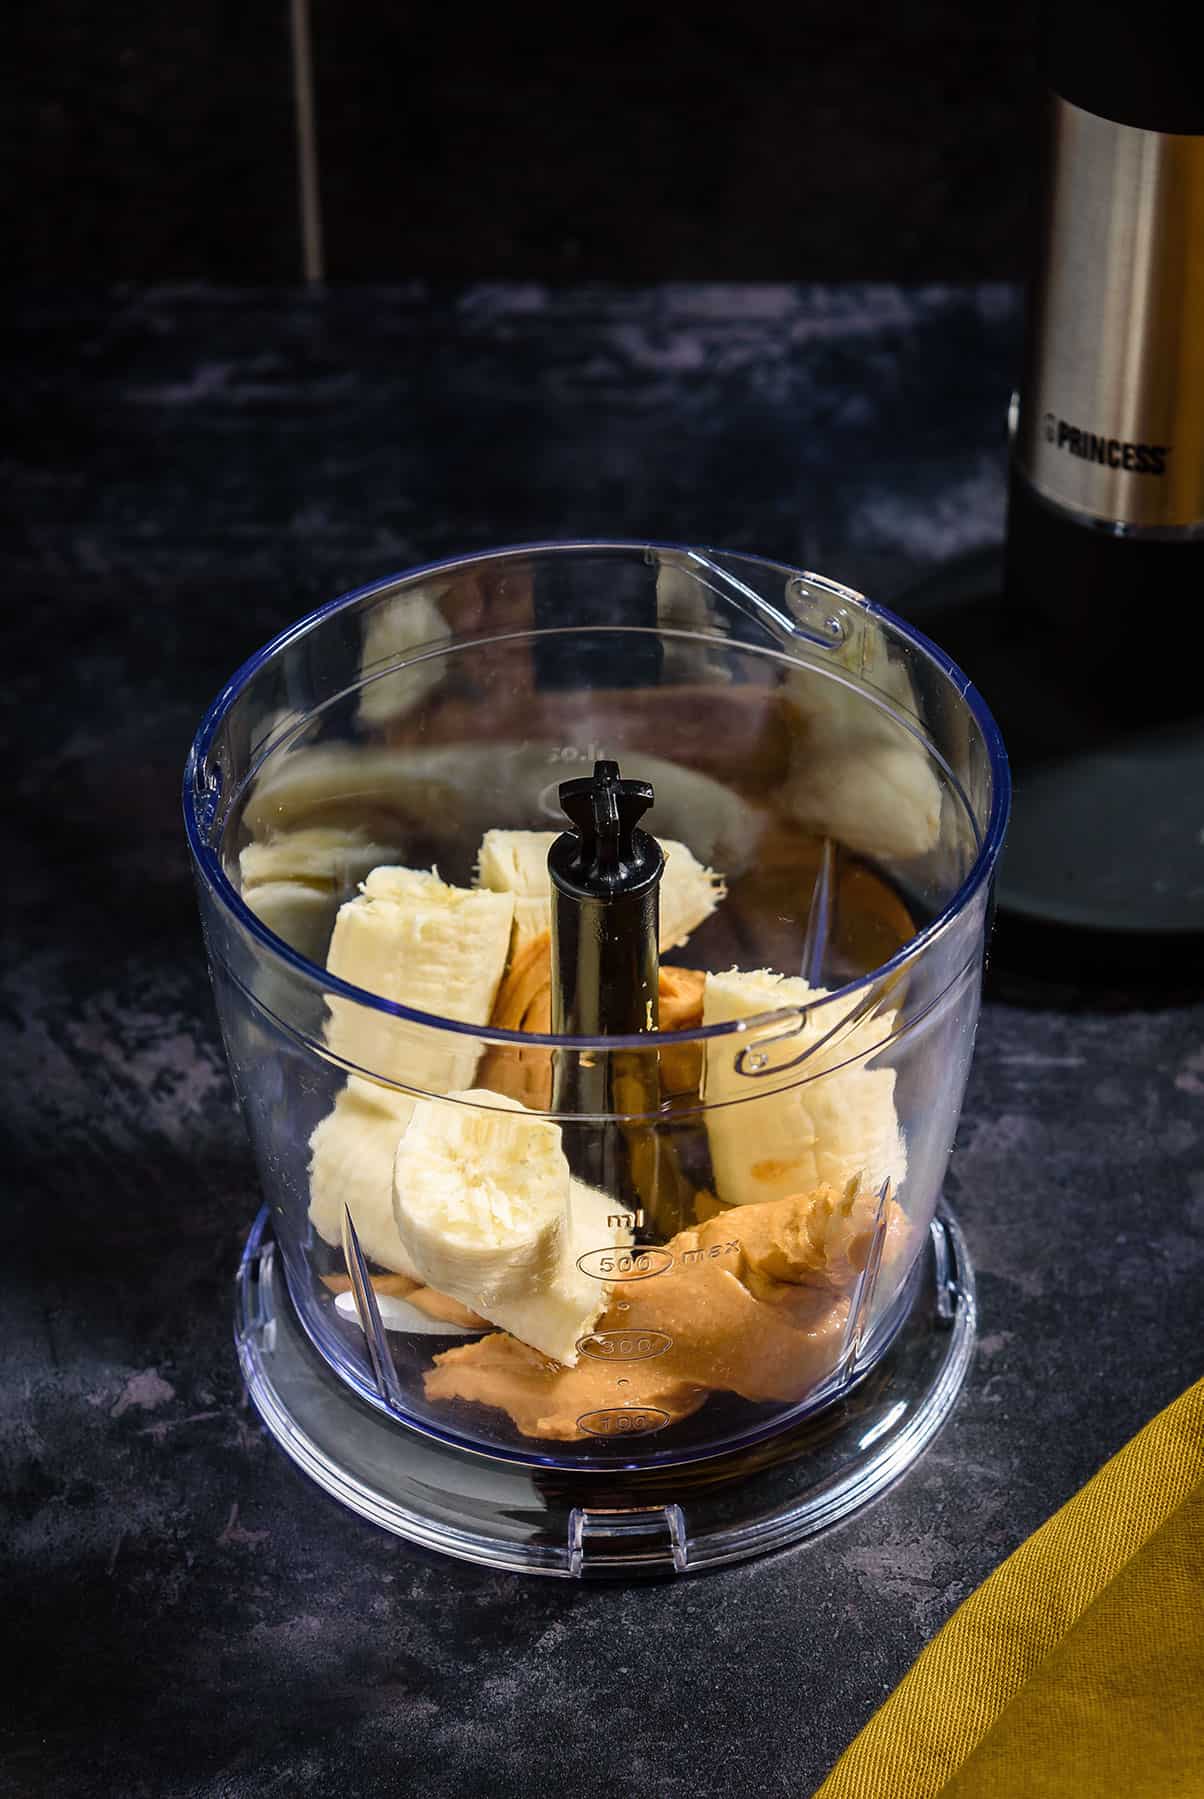 Peanut-butter and banana in blending bowl